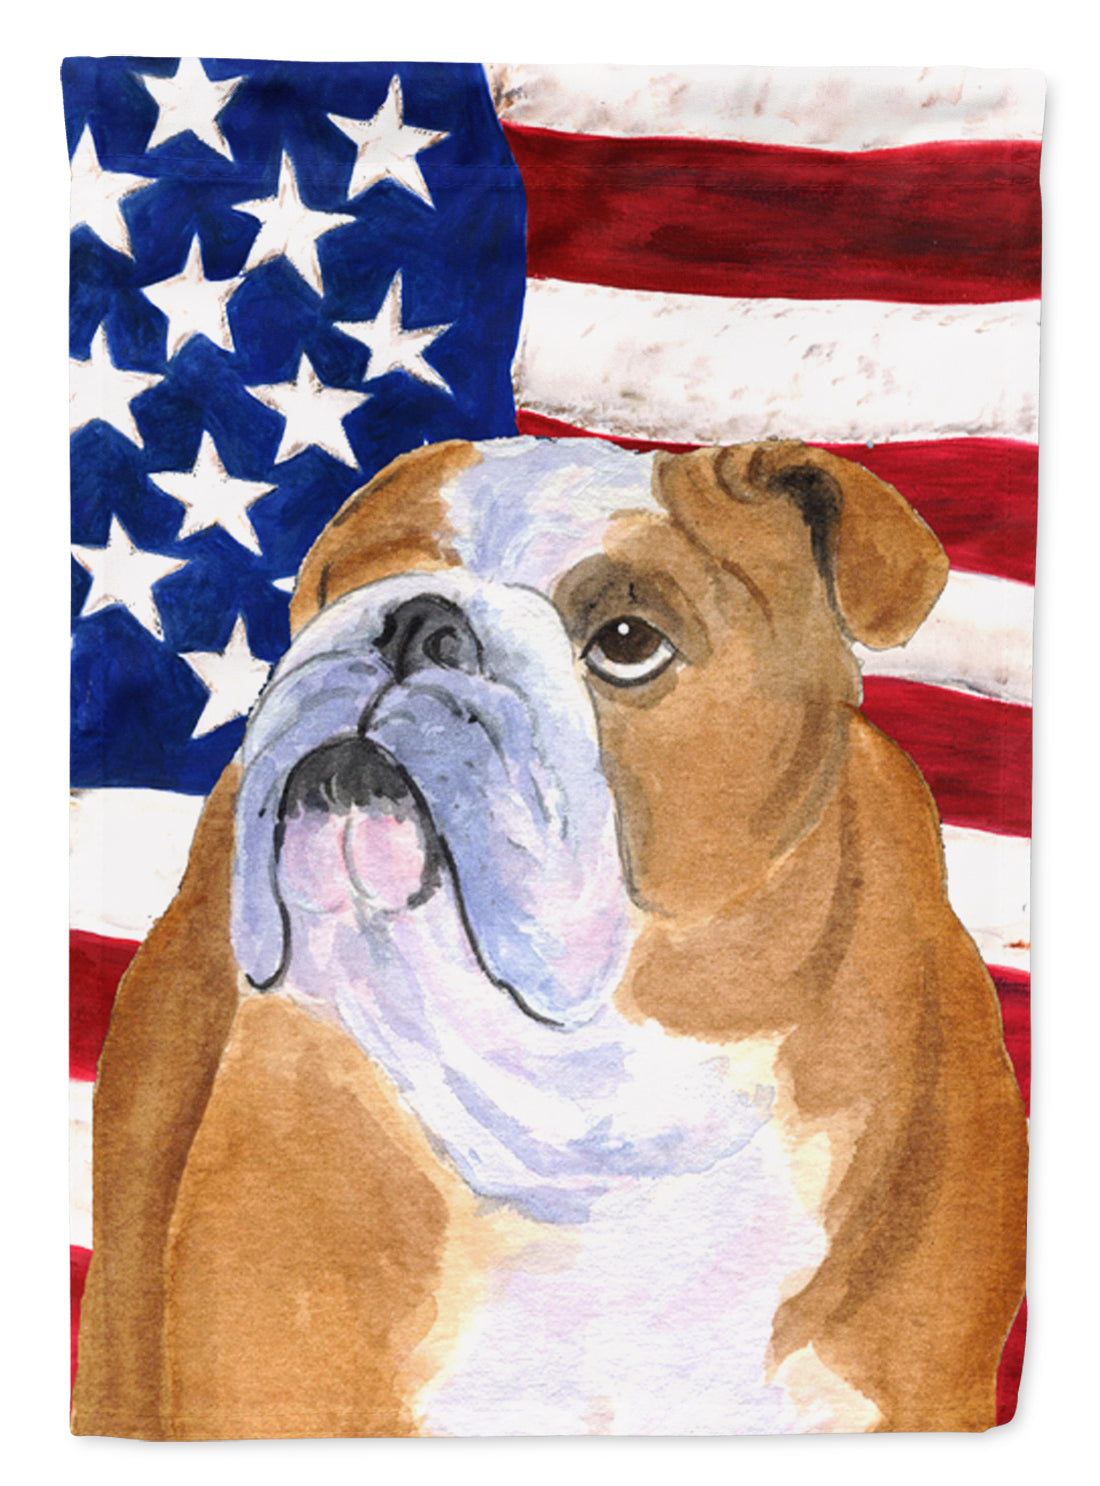 USA American Flag with Bulldog English Flag Garden Size.